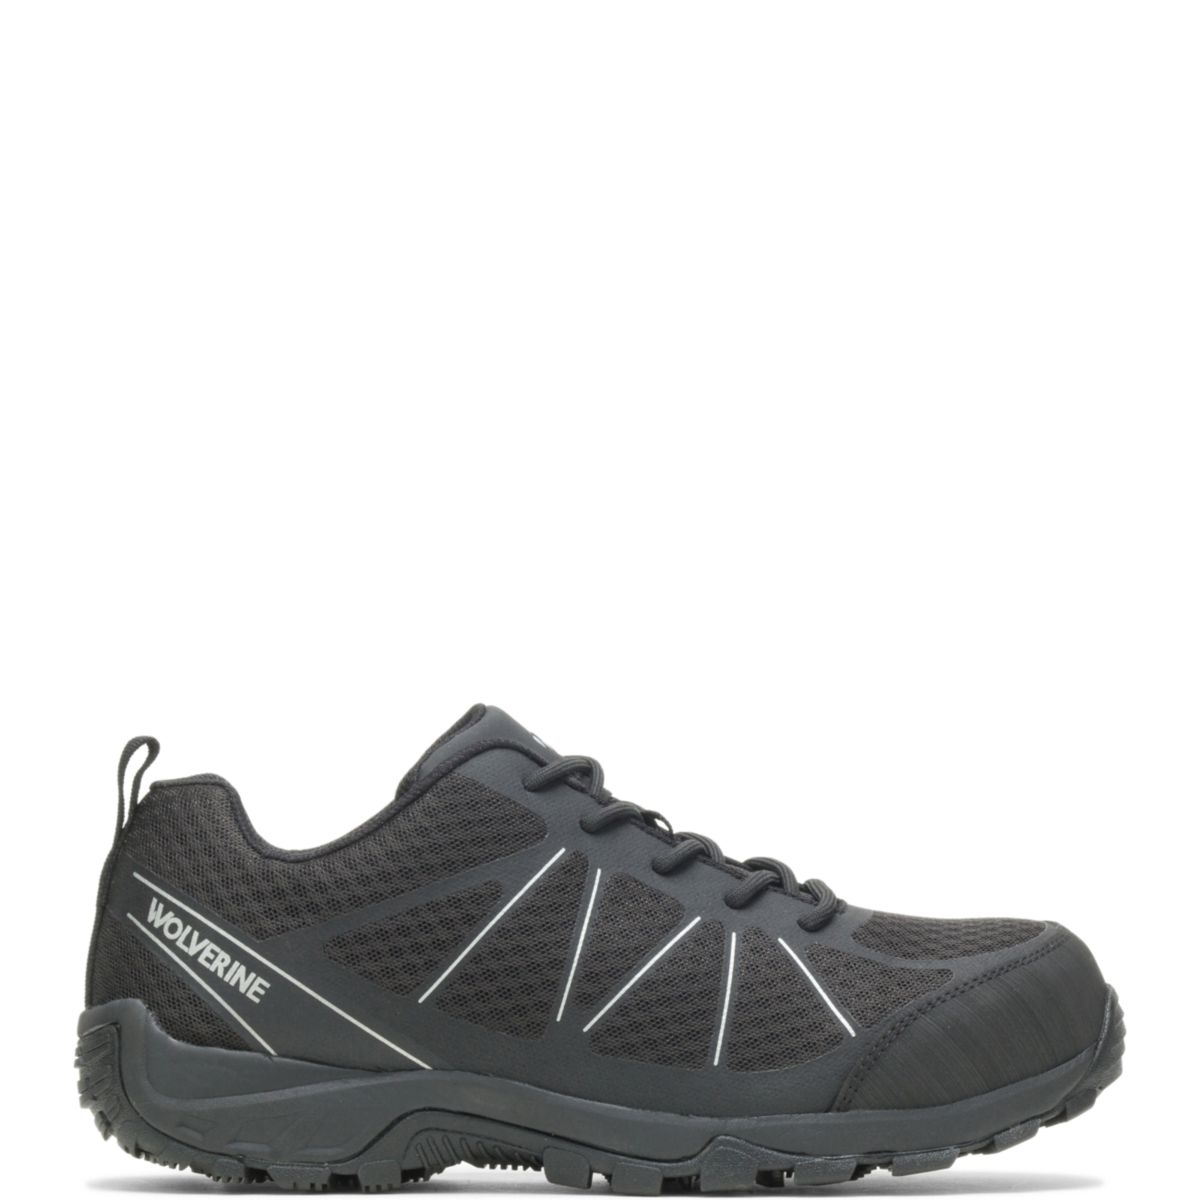 WOLVERINE Men's Amherst II CarbonMAXÂ® Composite Toe Work Shoe Black - W201147 BLACK - BLACK, 10.5